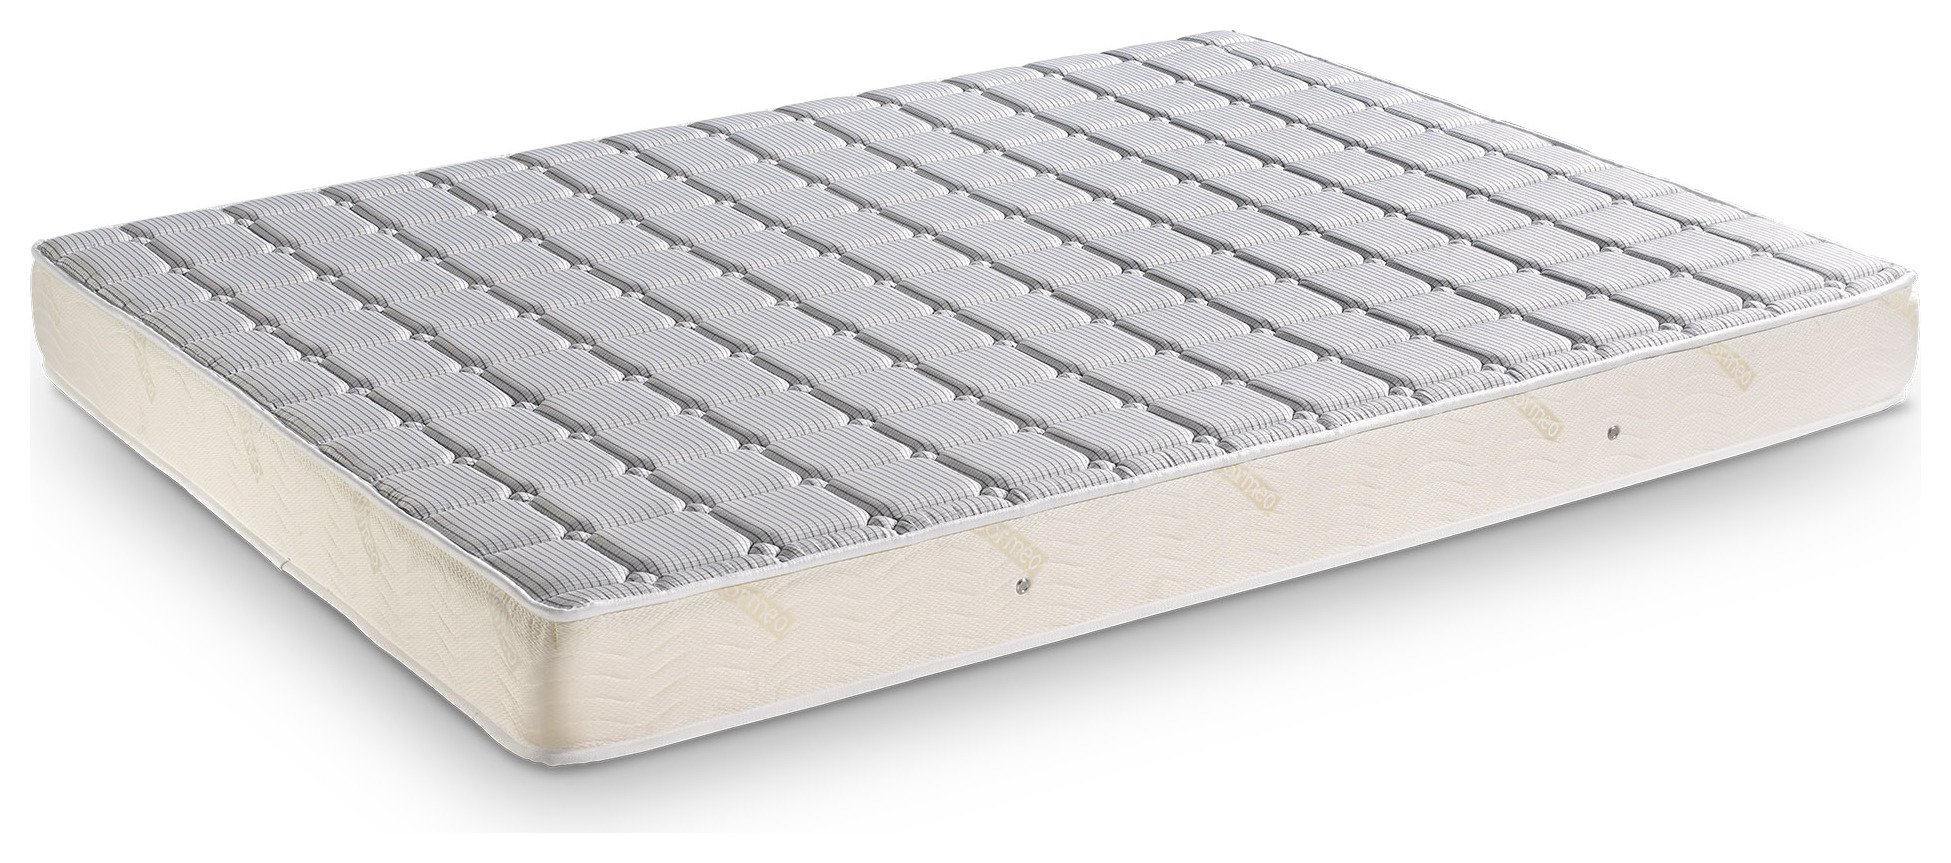 dormeo memory deluxe mattress review